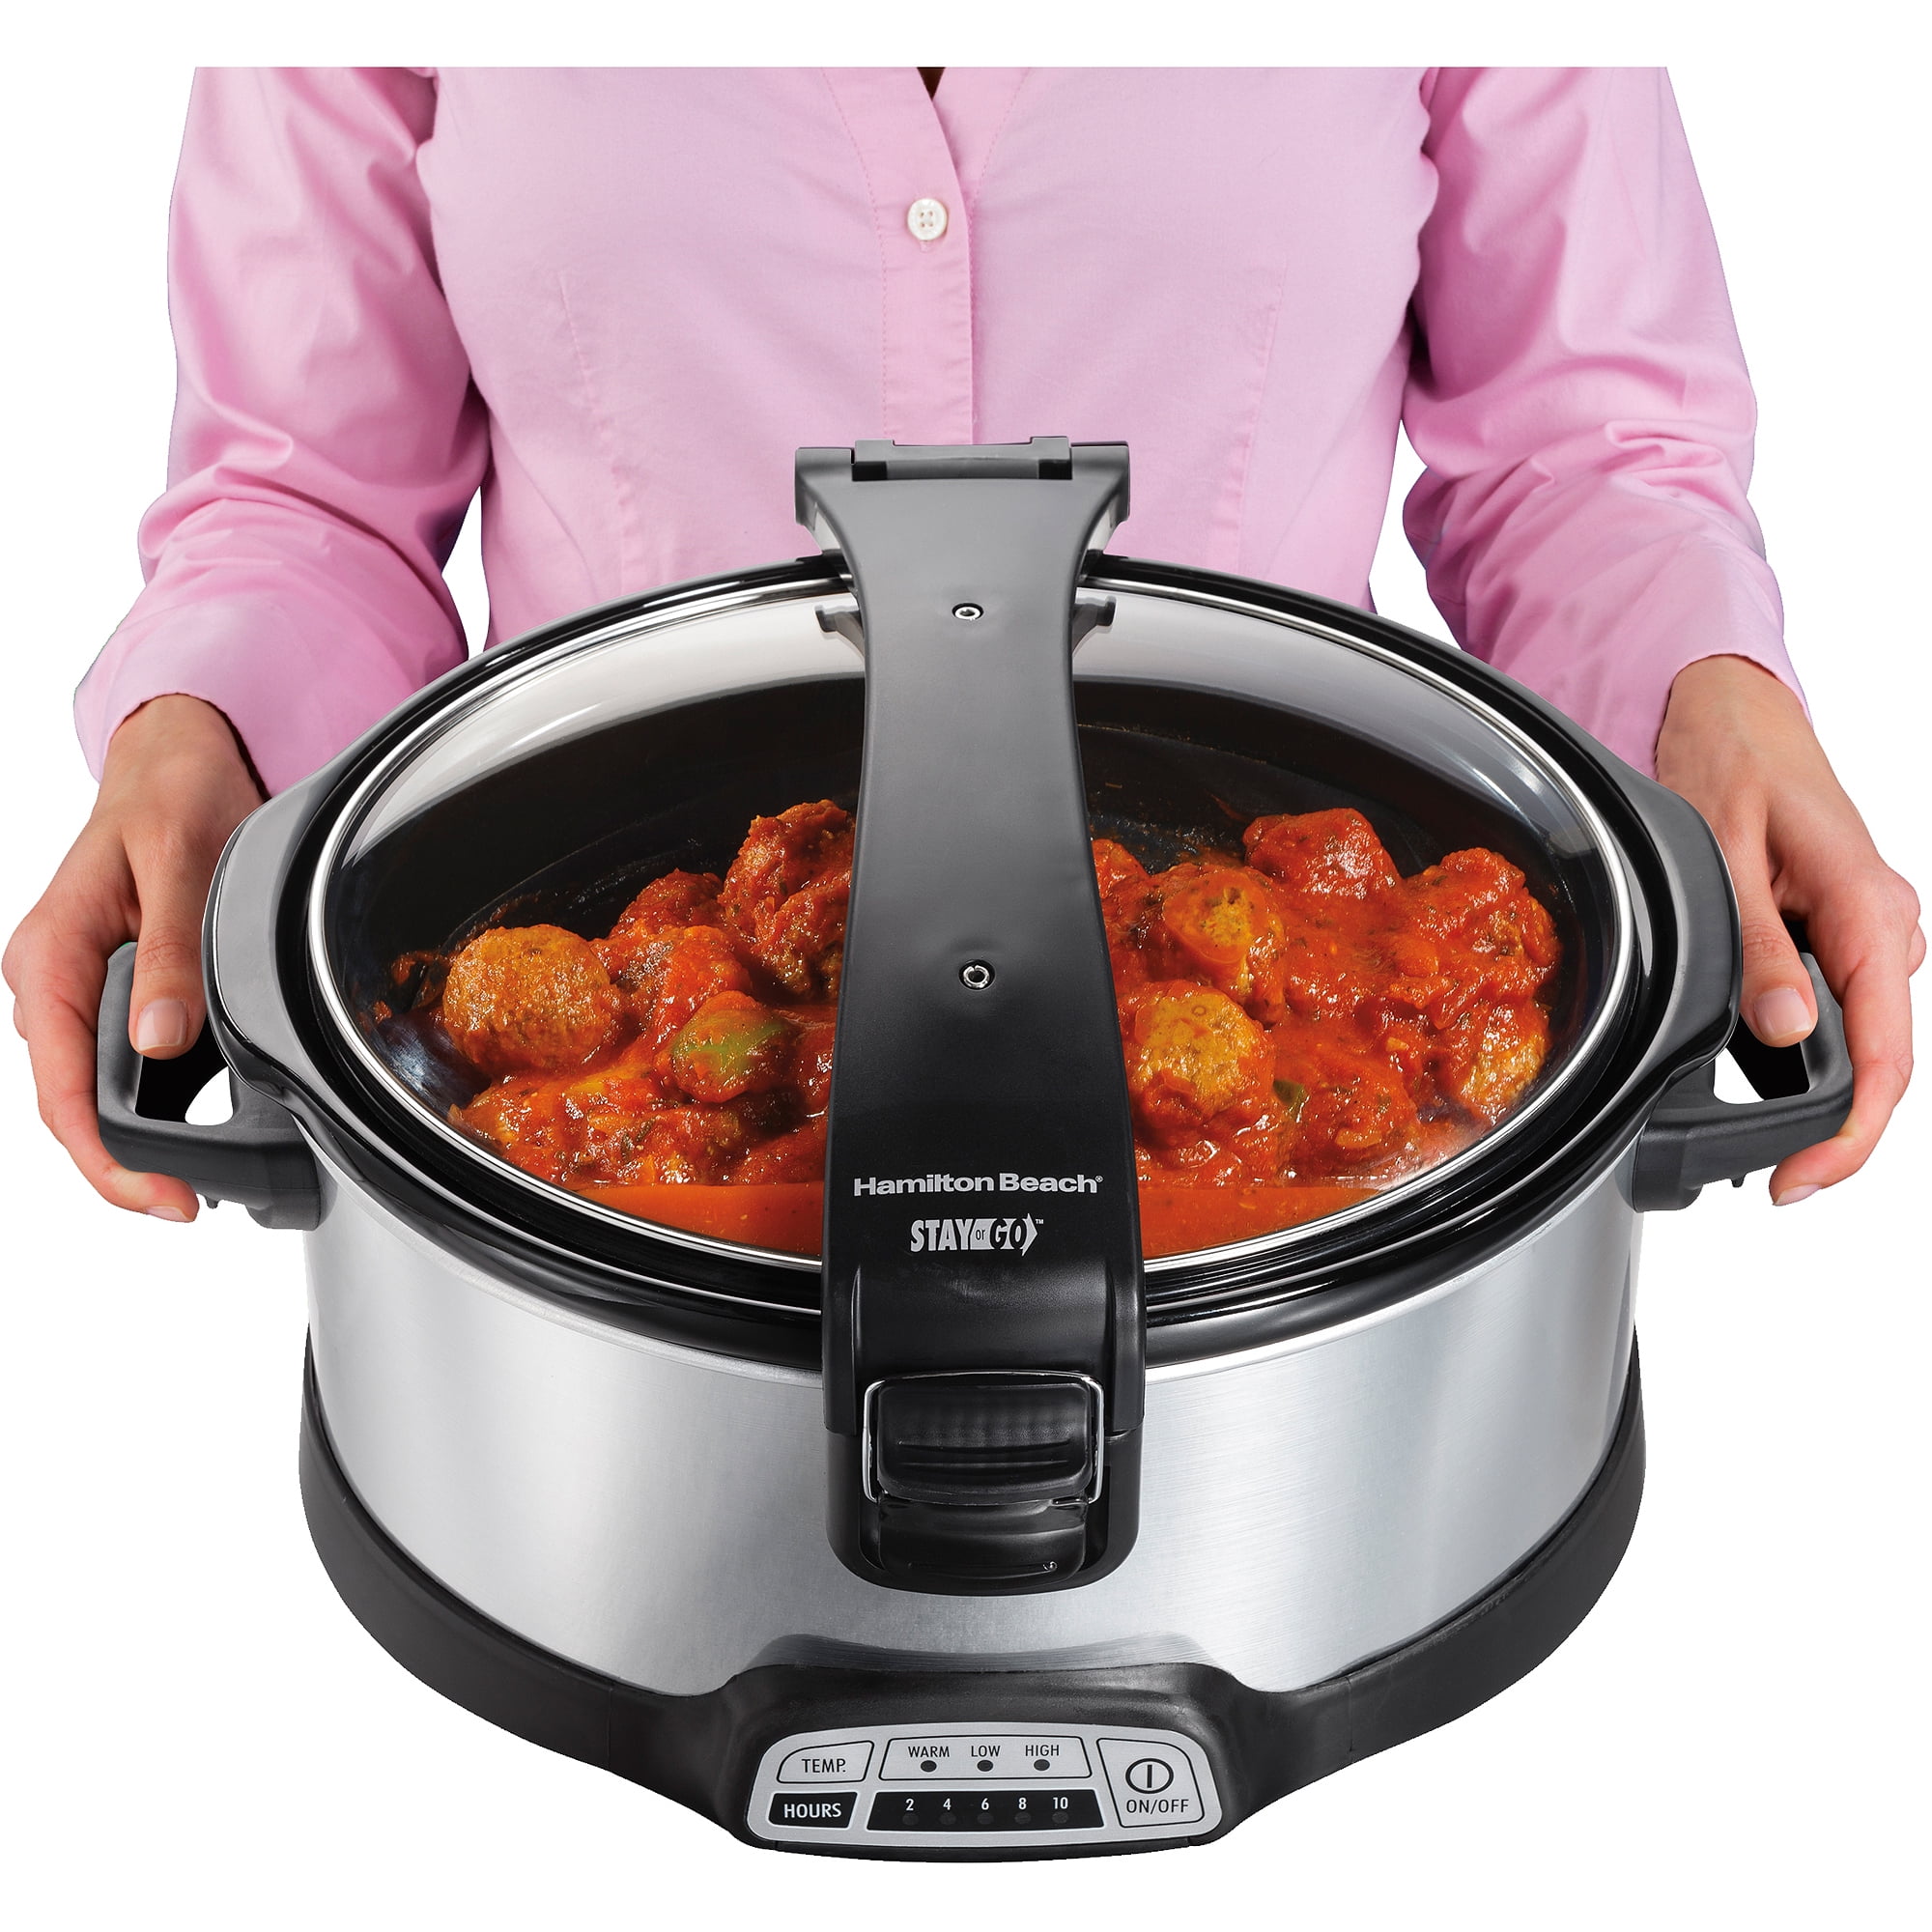  Crock-Pot SCCPCTS605-S Cook Travel Serve 6-Quart Programmable Slow  Cooker: Home & Kitchen